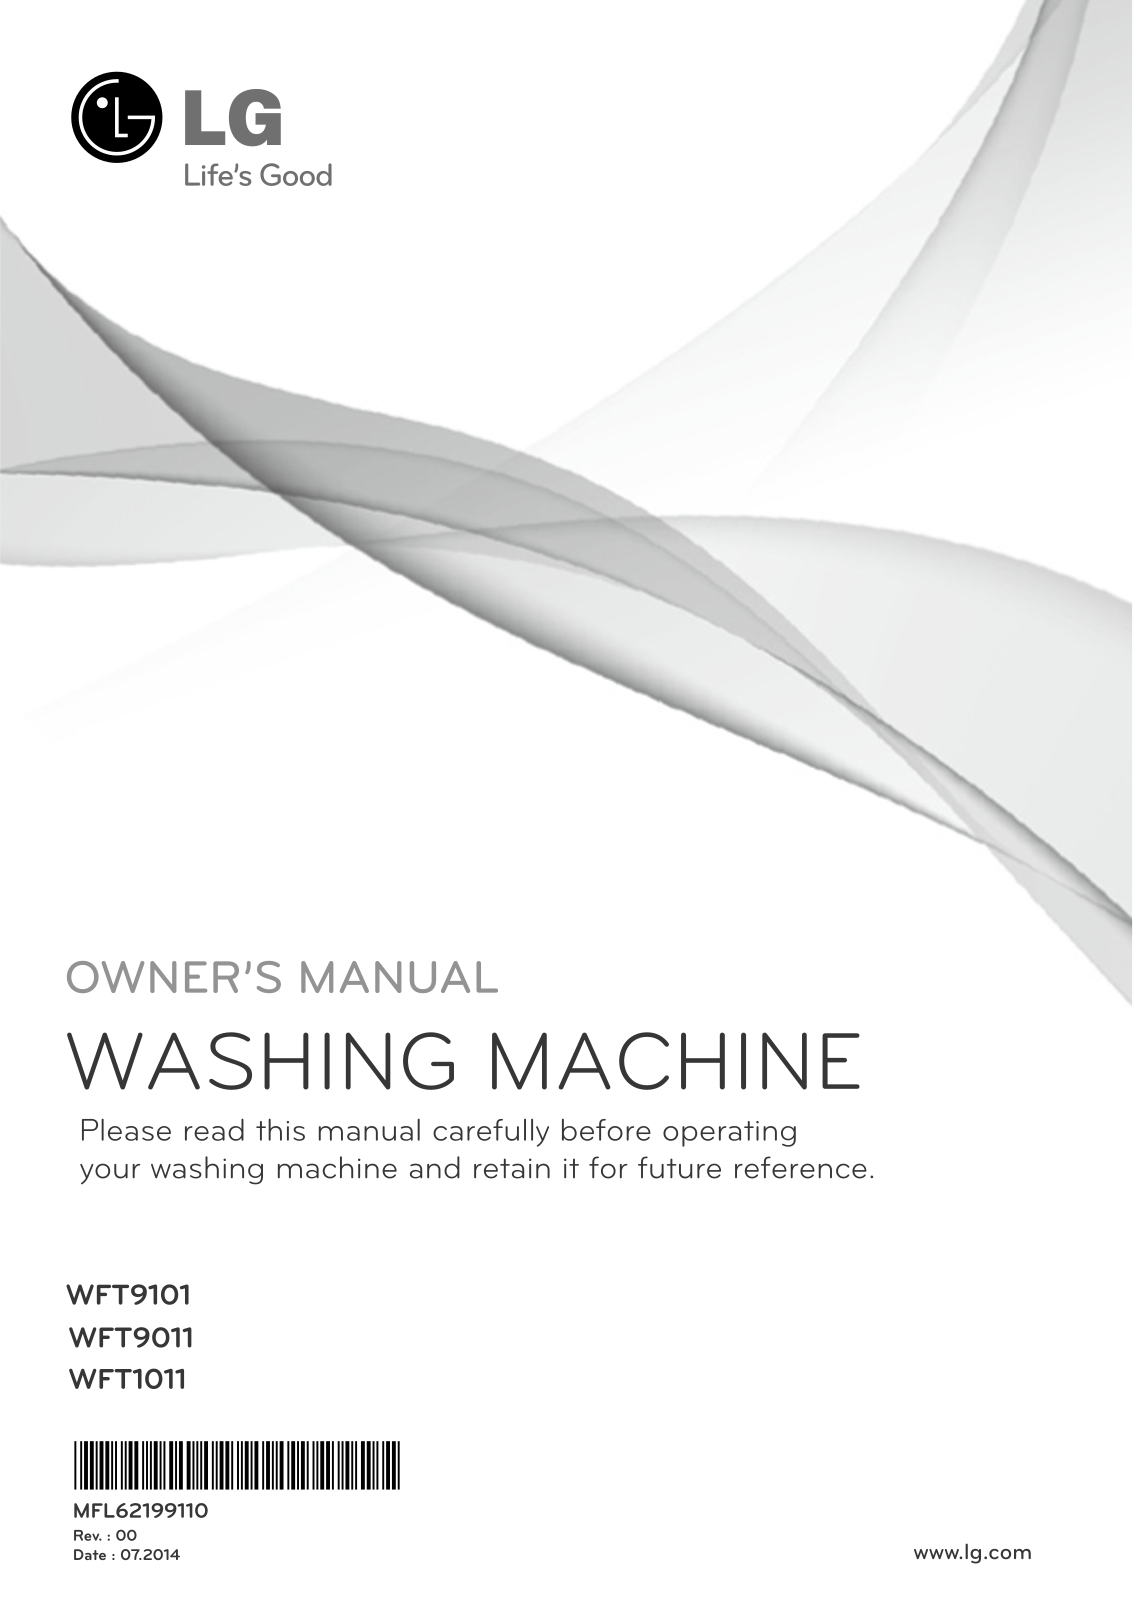 LG WFT9011 Instruction manual